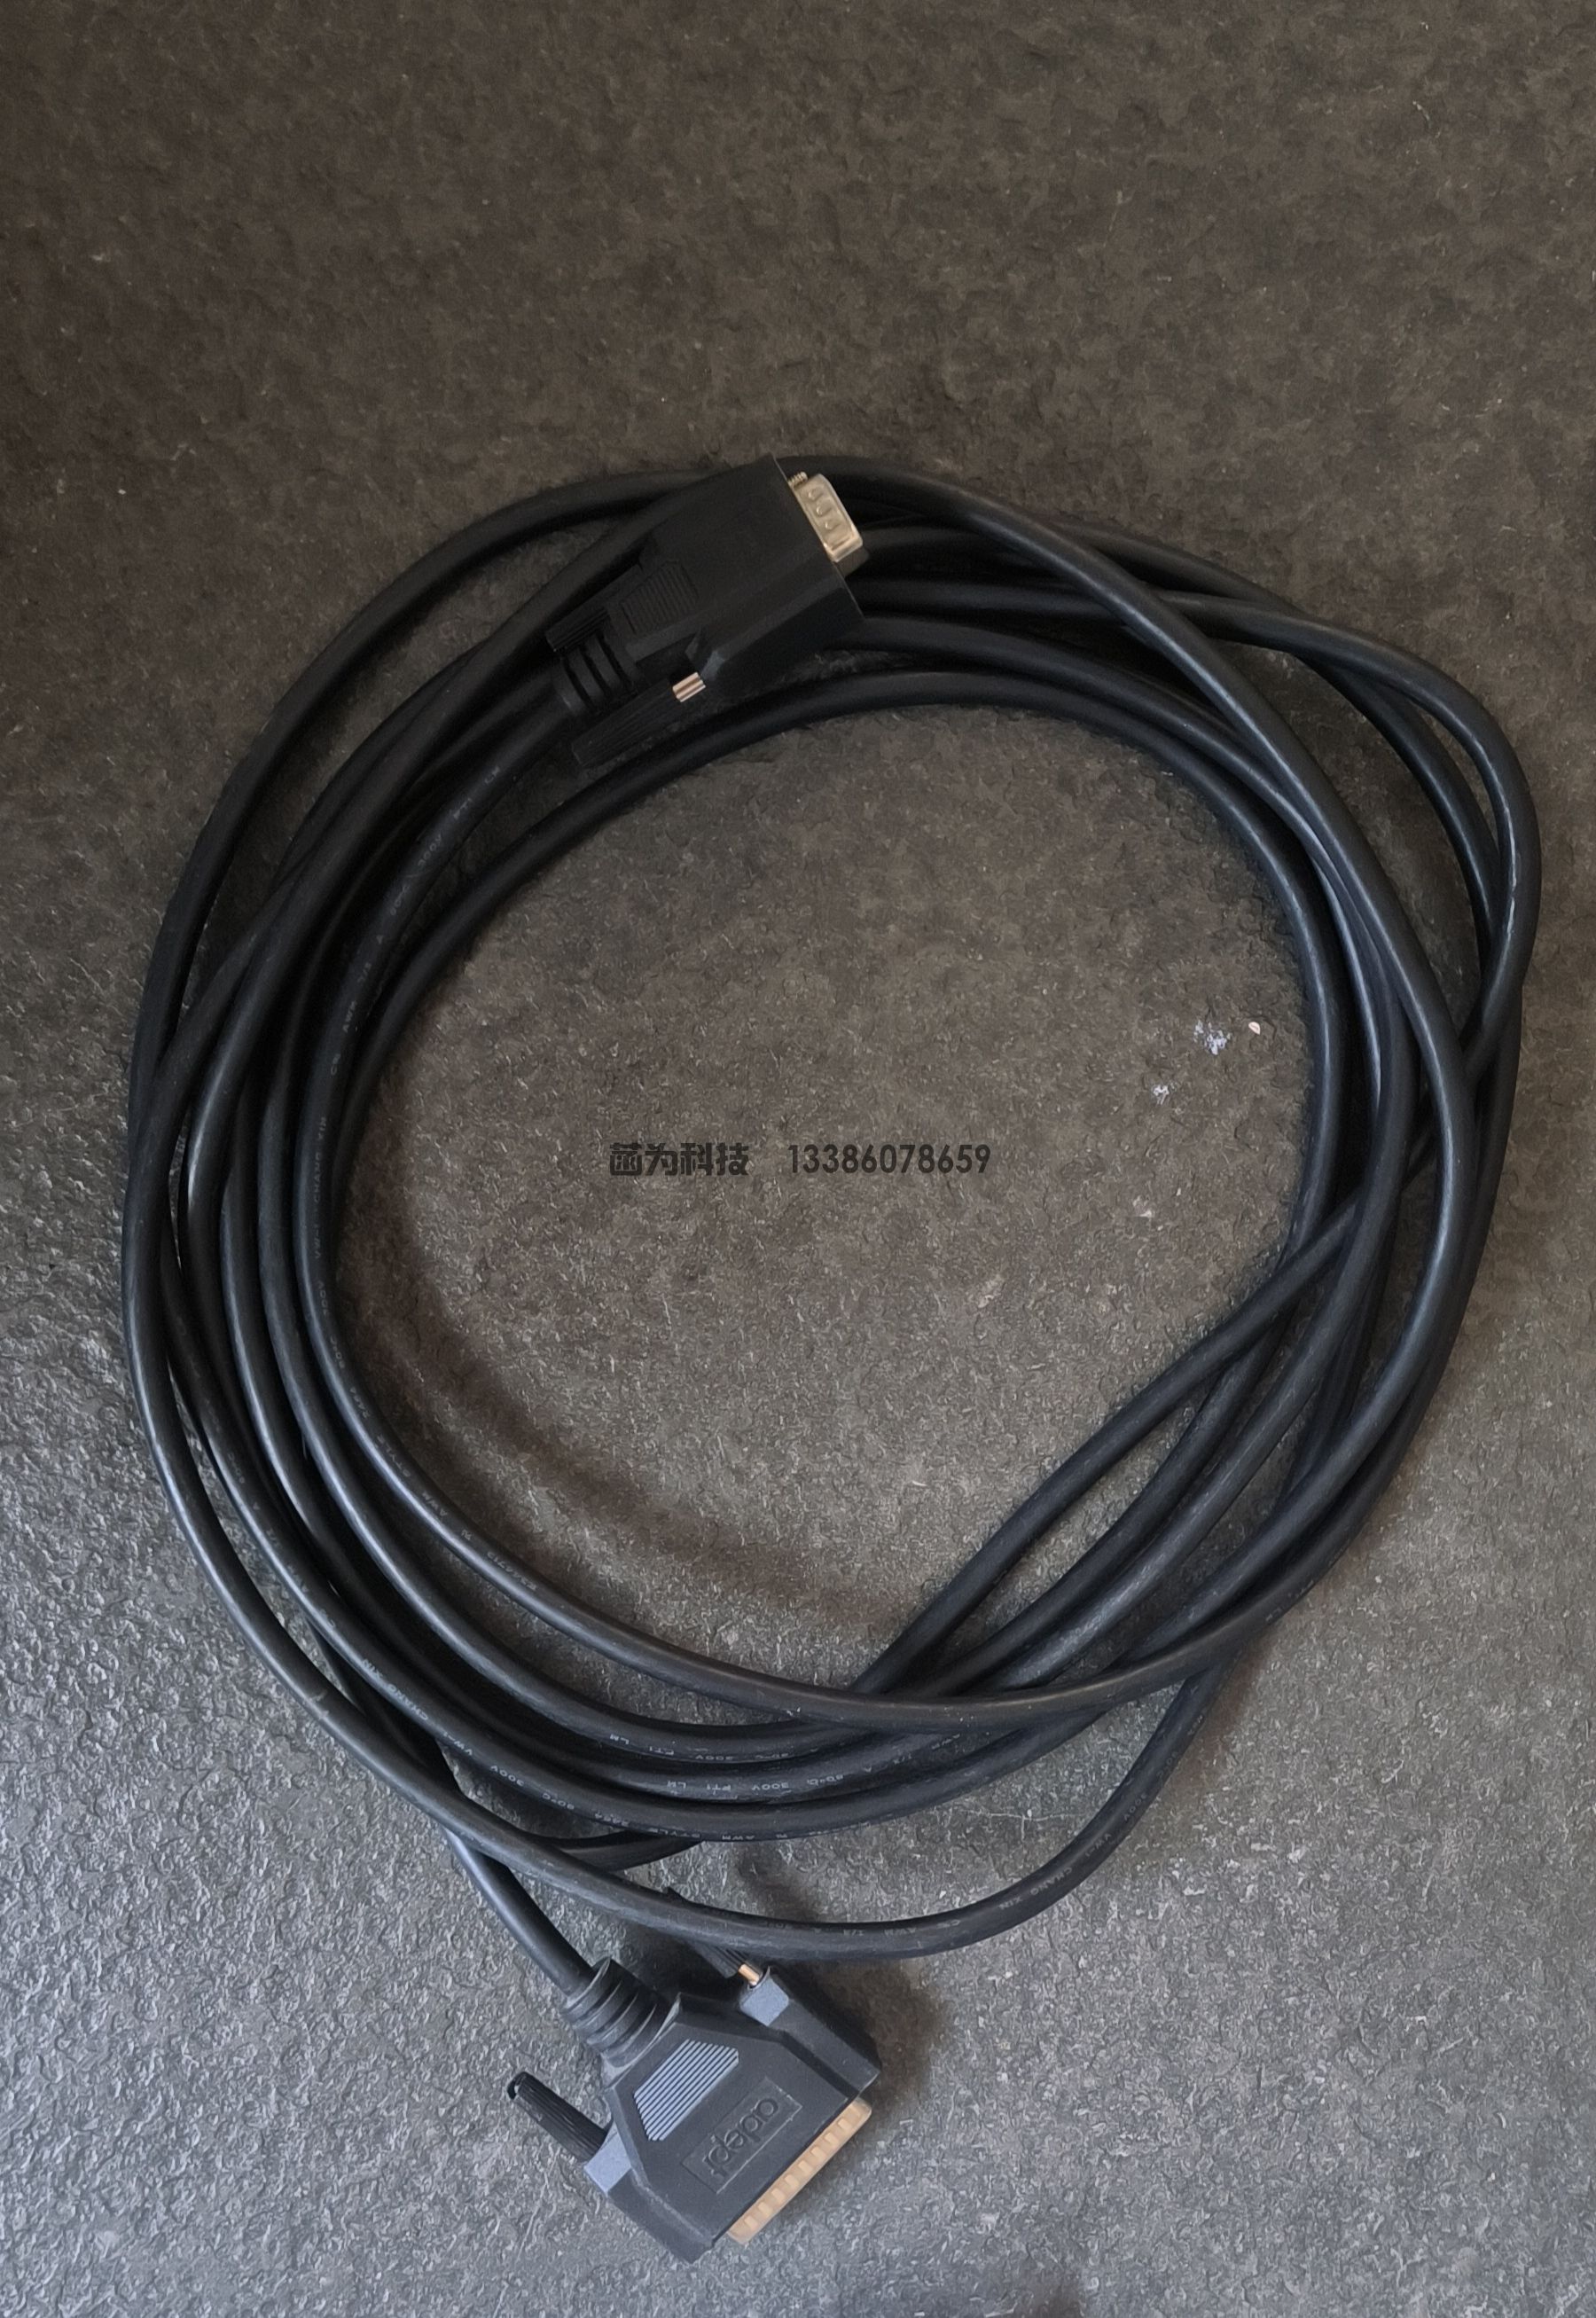 Omron|ADEPT eAIB XSYSTEM Cable 11585-000